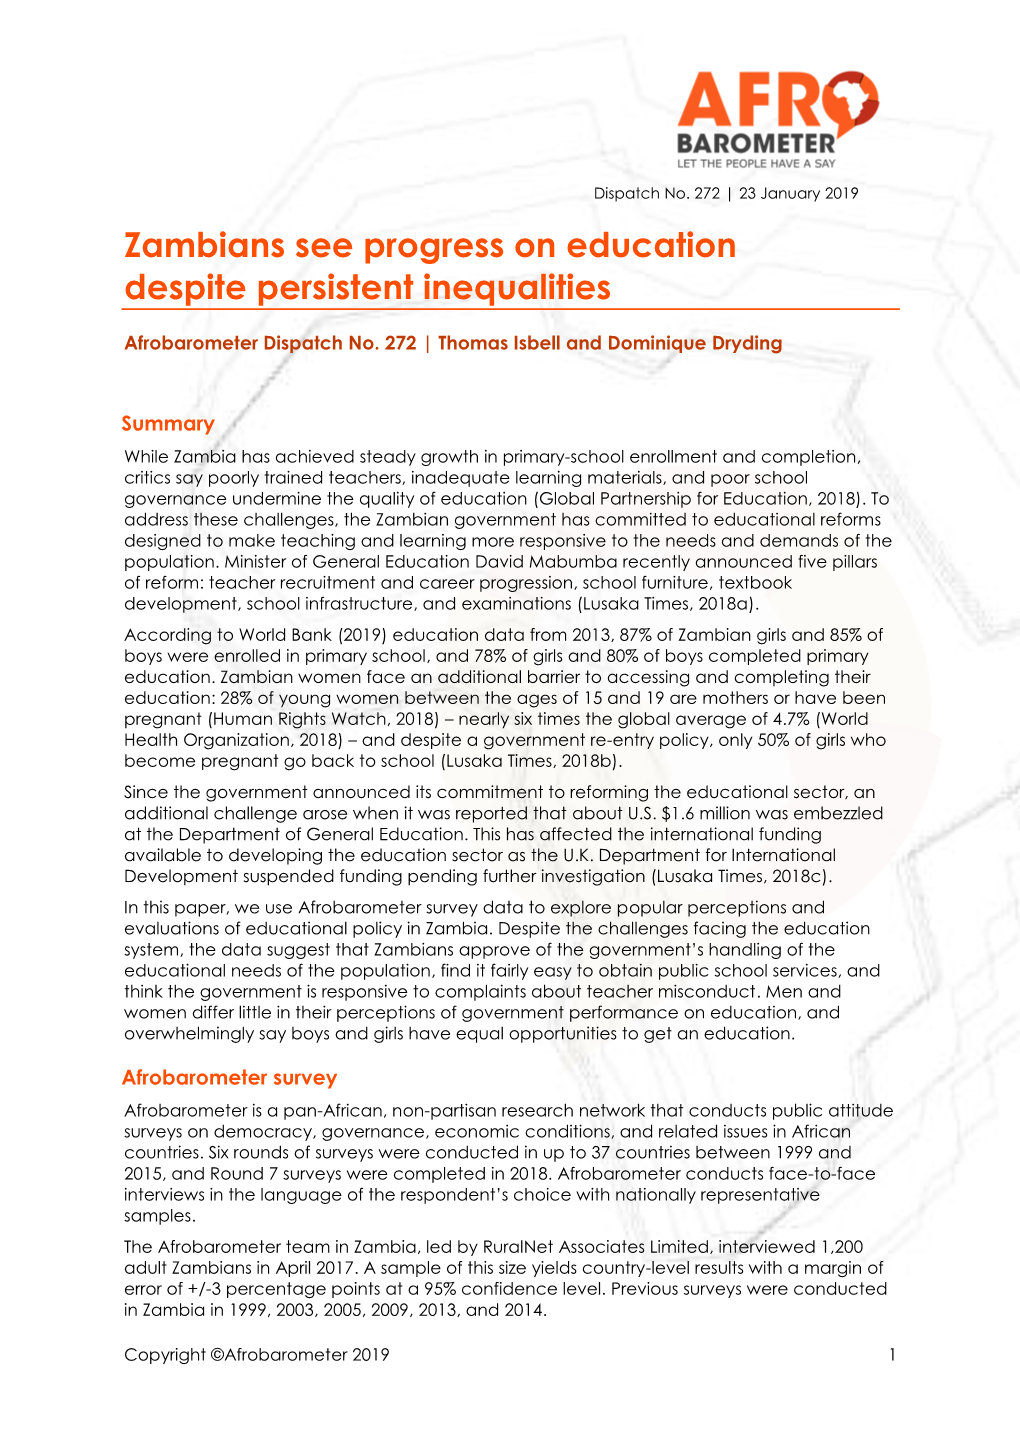 Zambians See Progress on Education Despite Persistent Inequalities